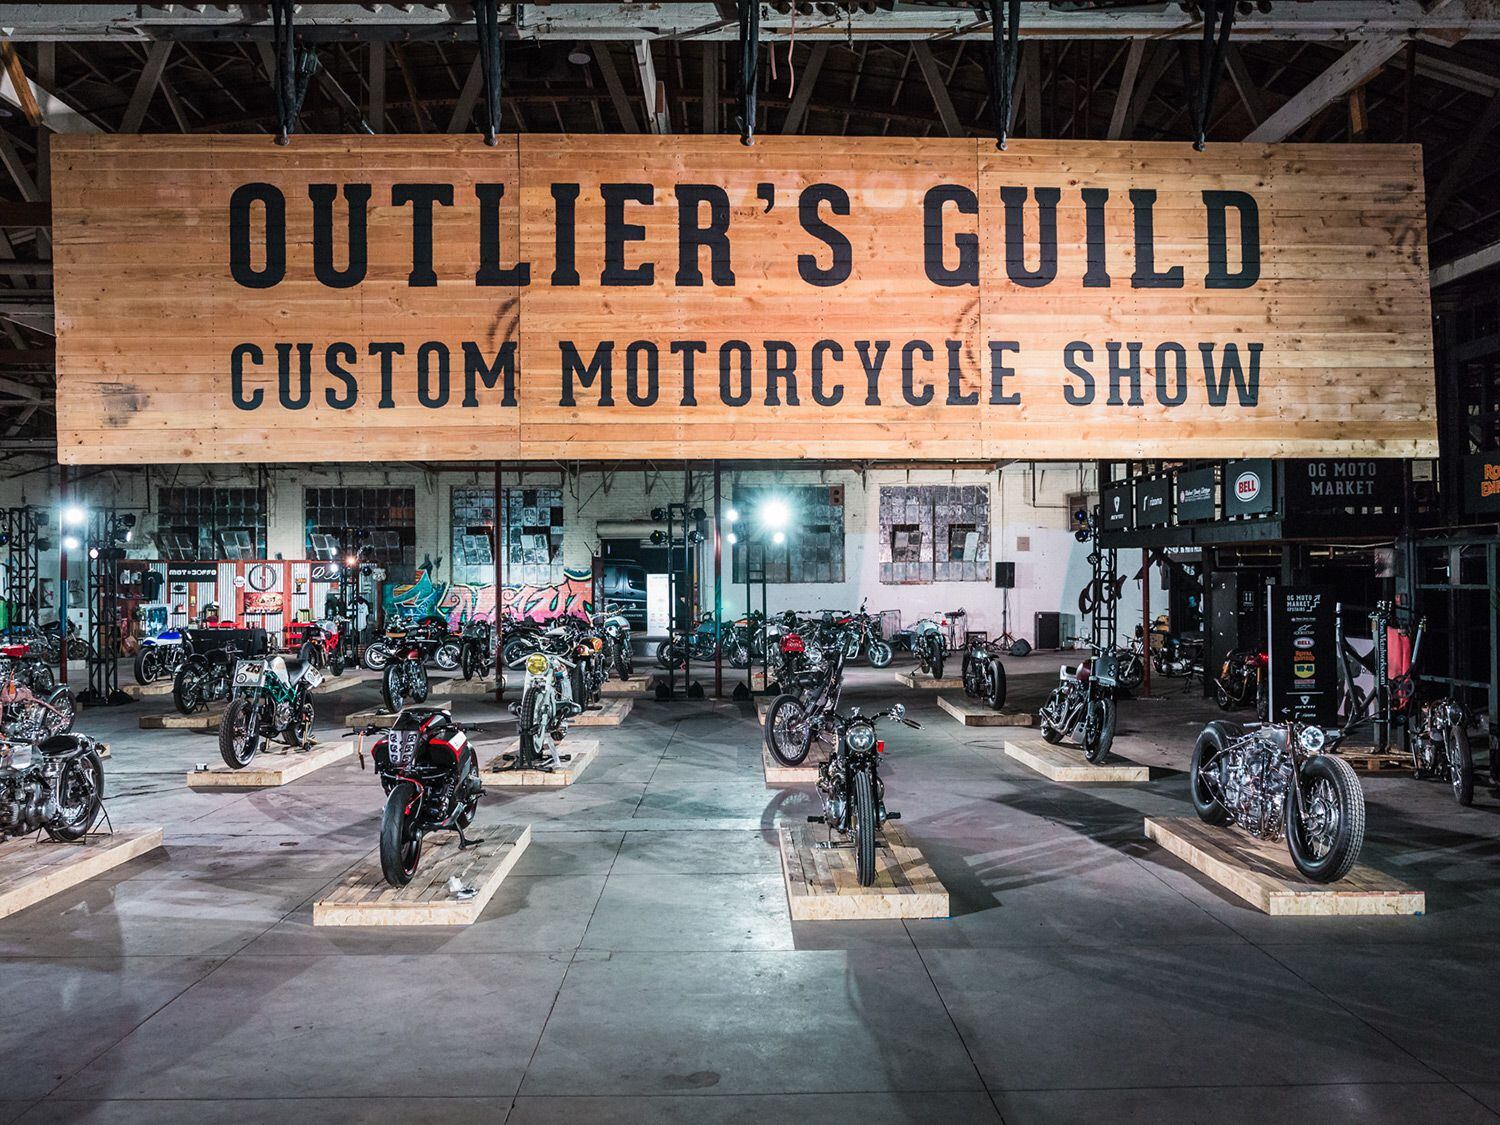 The OG Moto Show promises to be a sensory overload for custom bike and art fanatics alike.